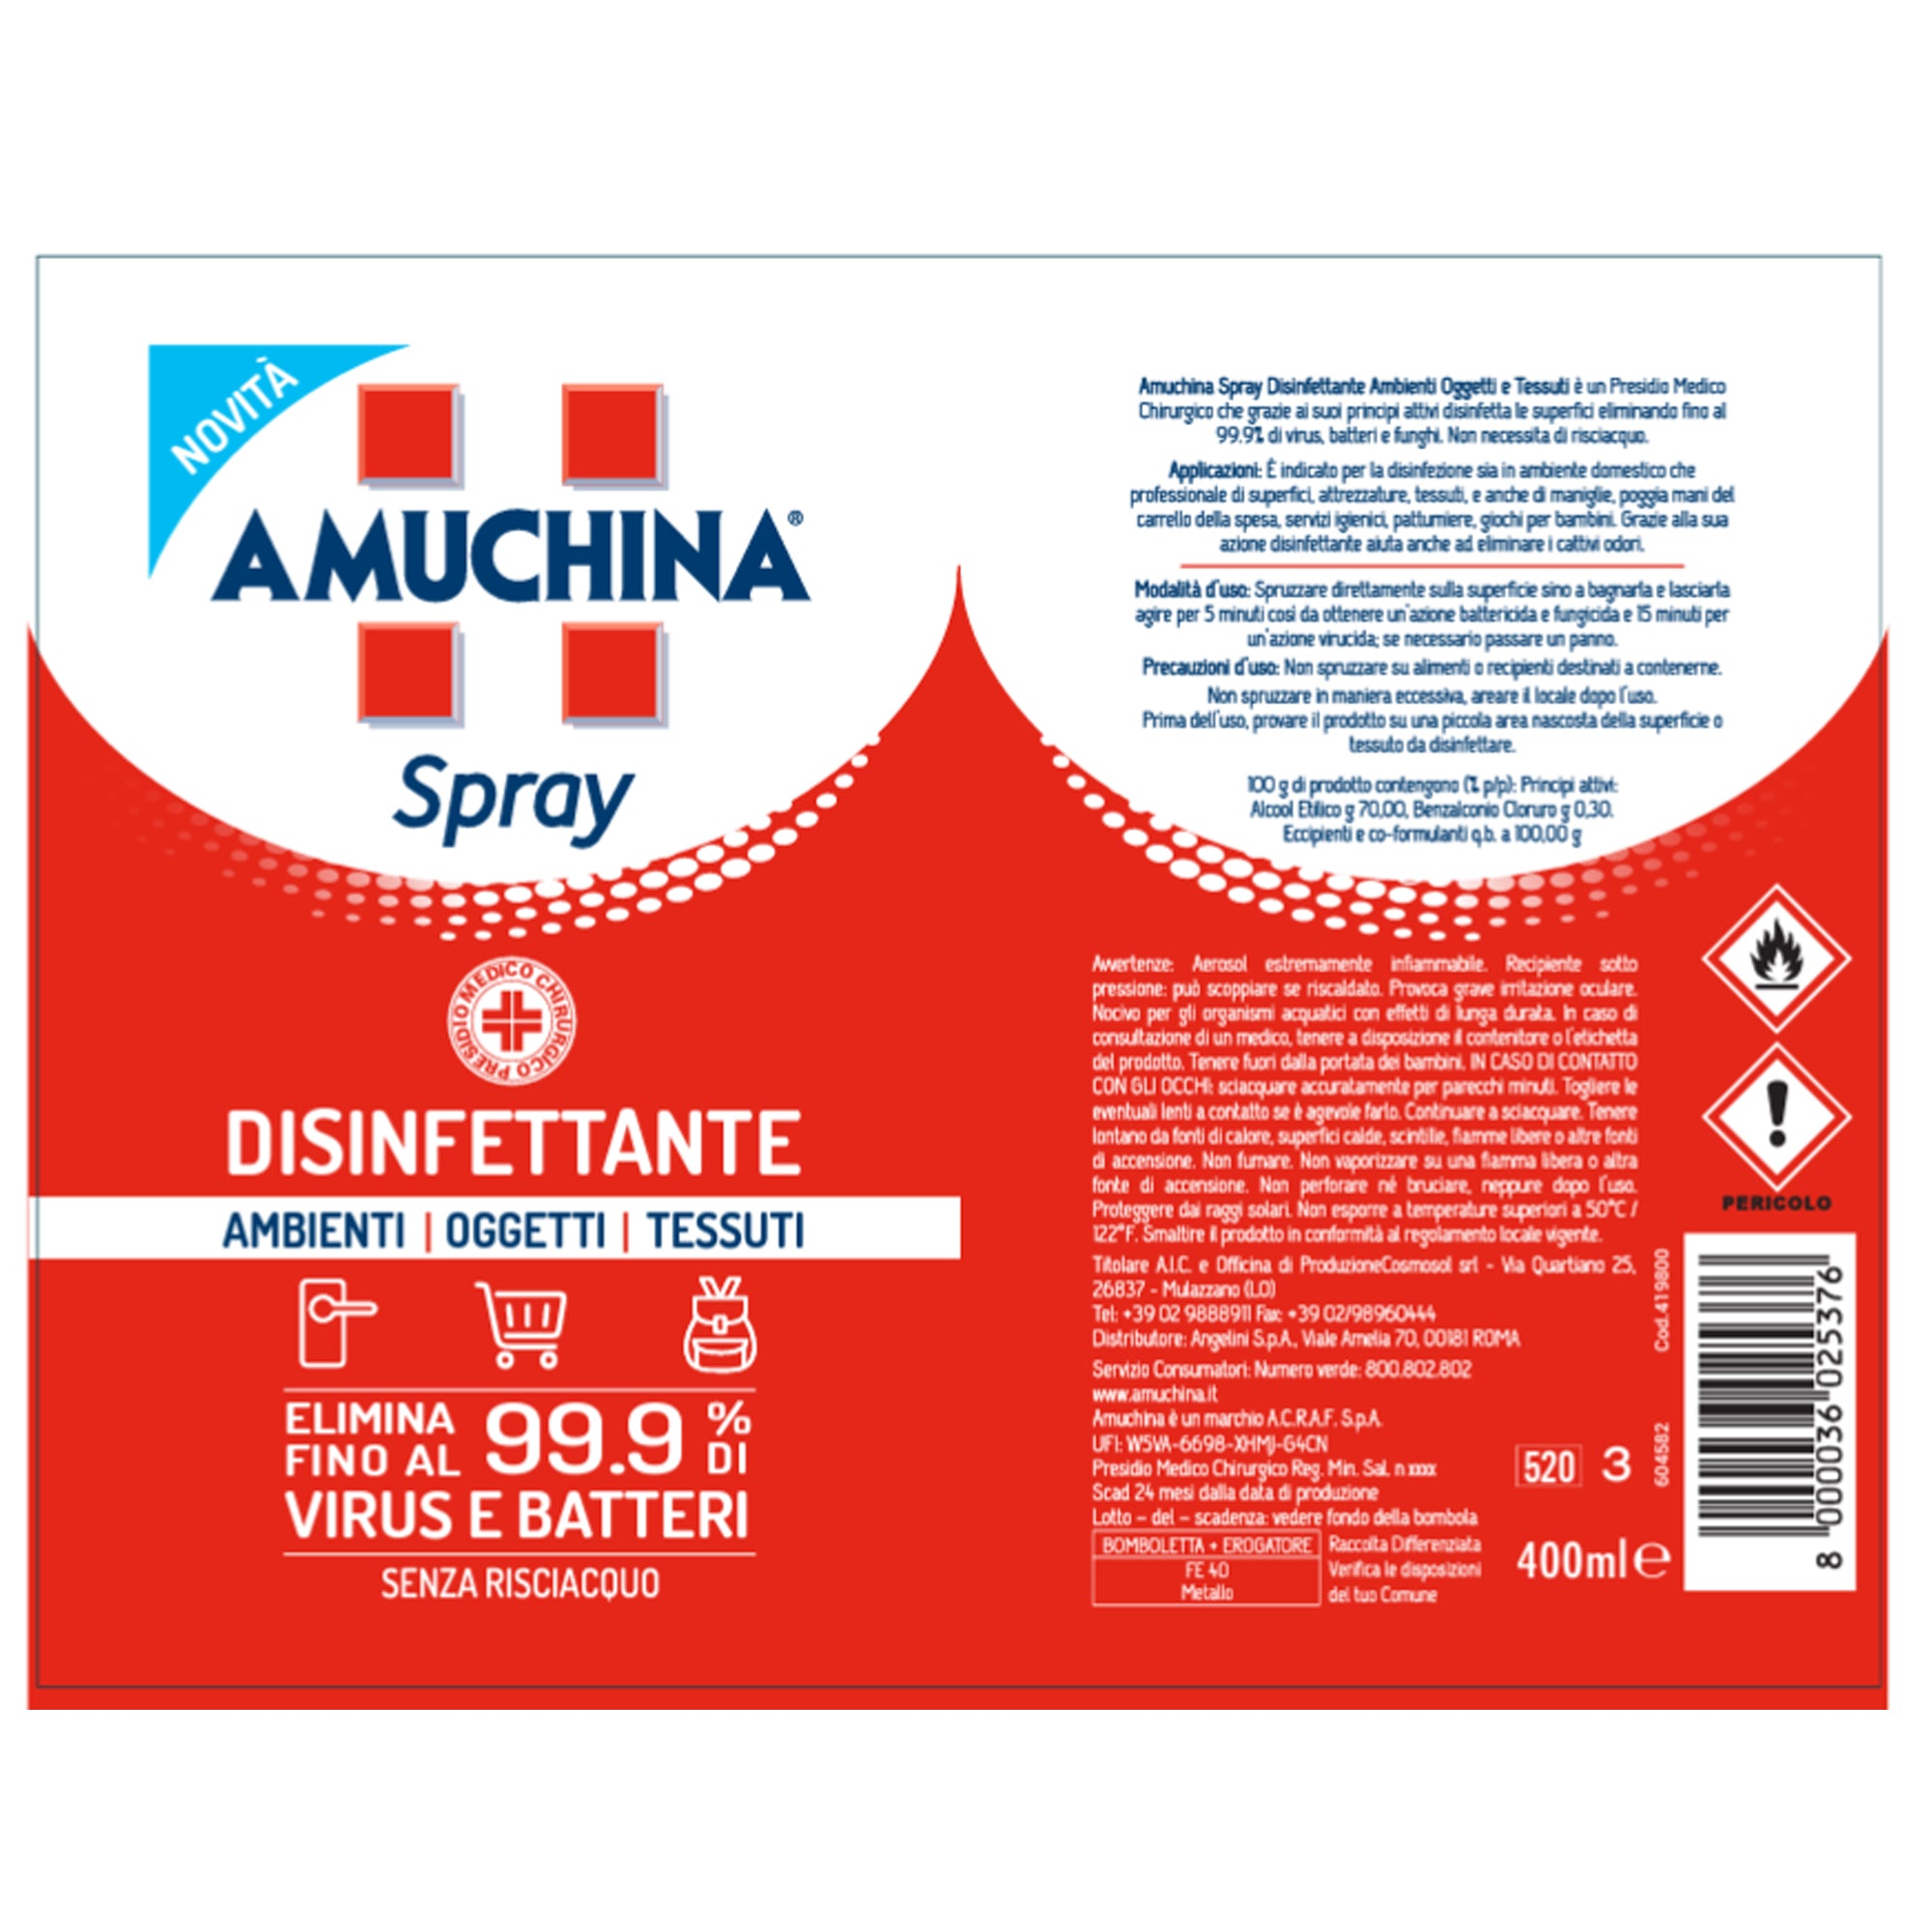 amuchina-professional-amuchina-spray-disinfettante-ambienti-oggetti-tessuti-400ml